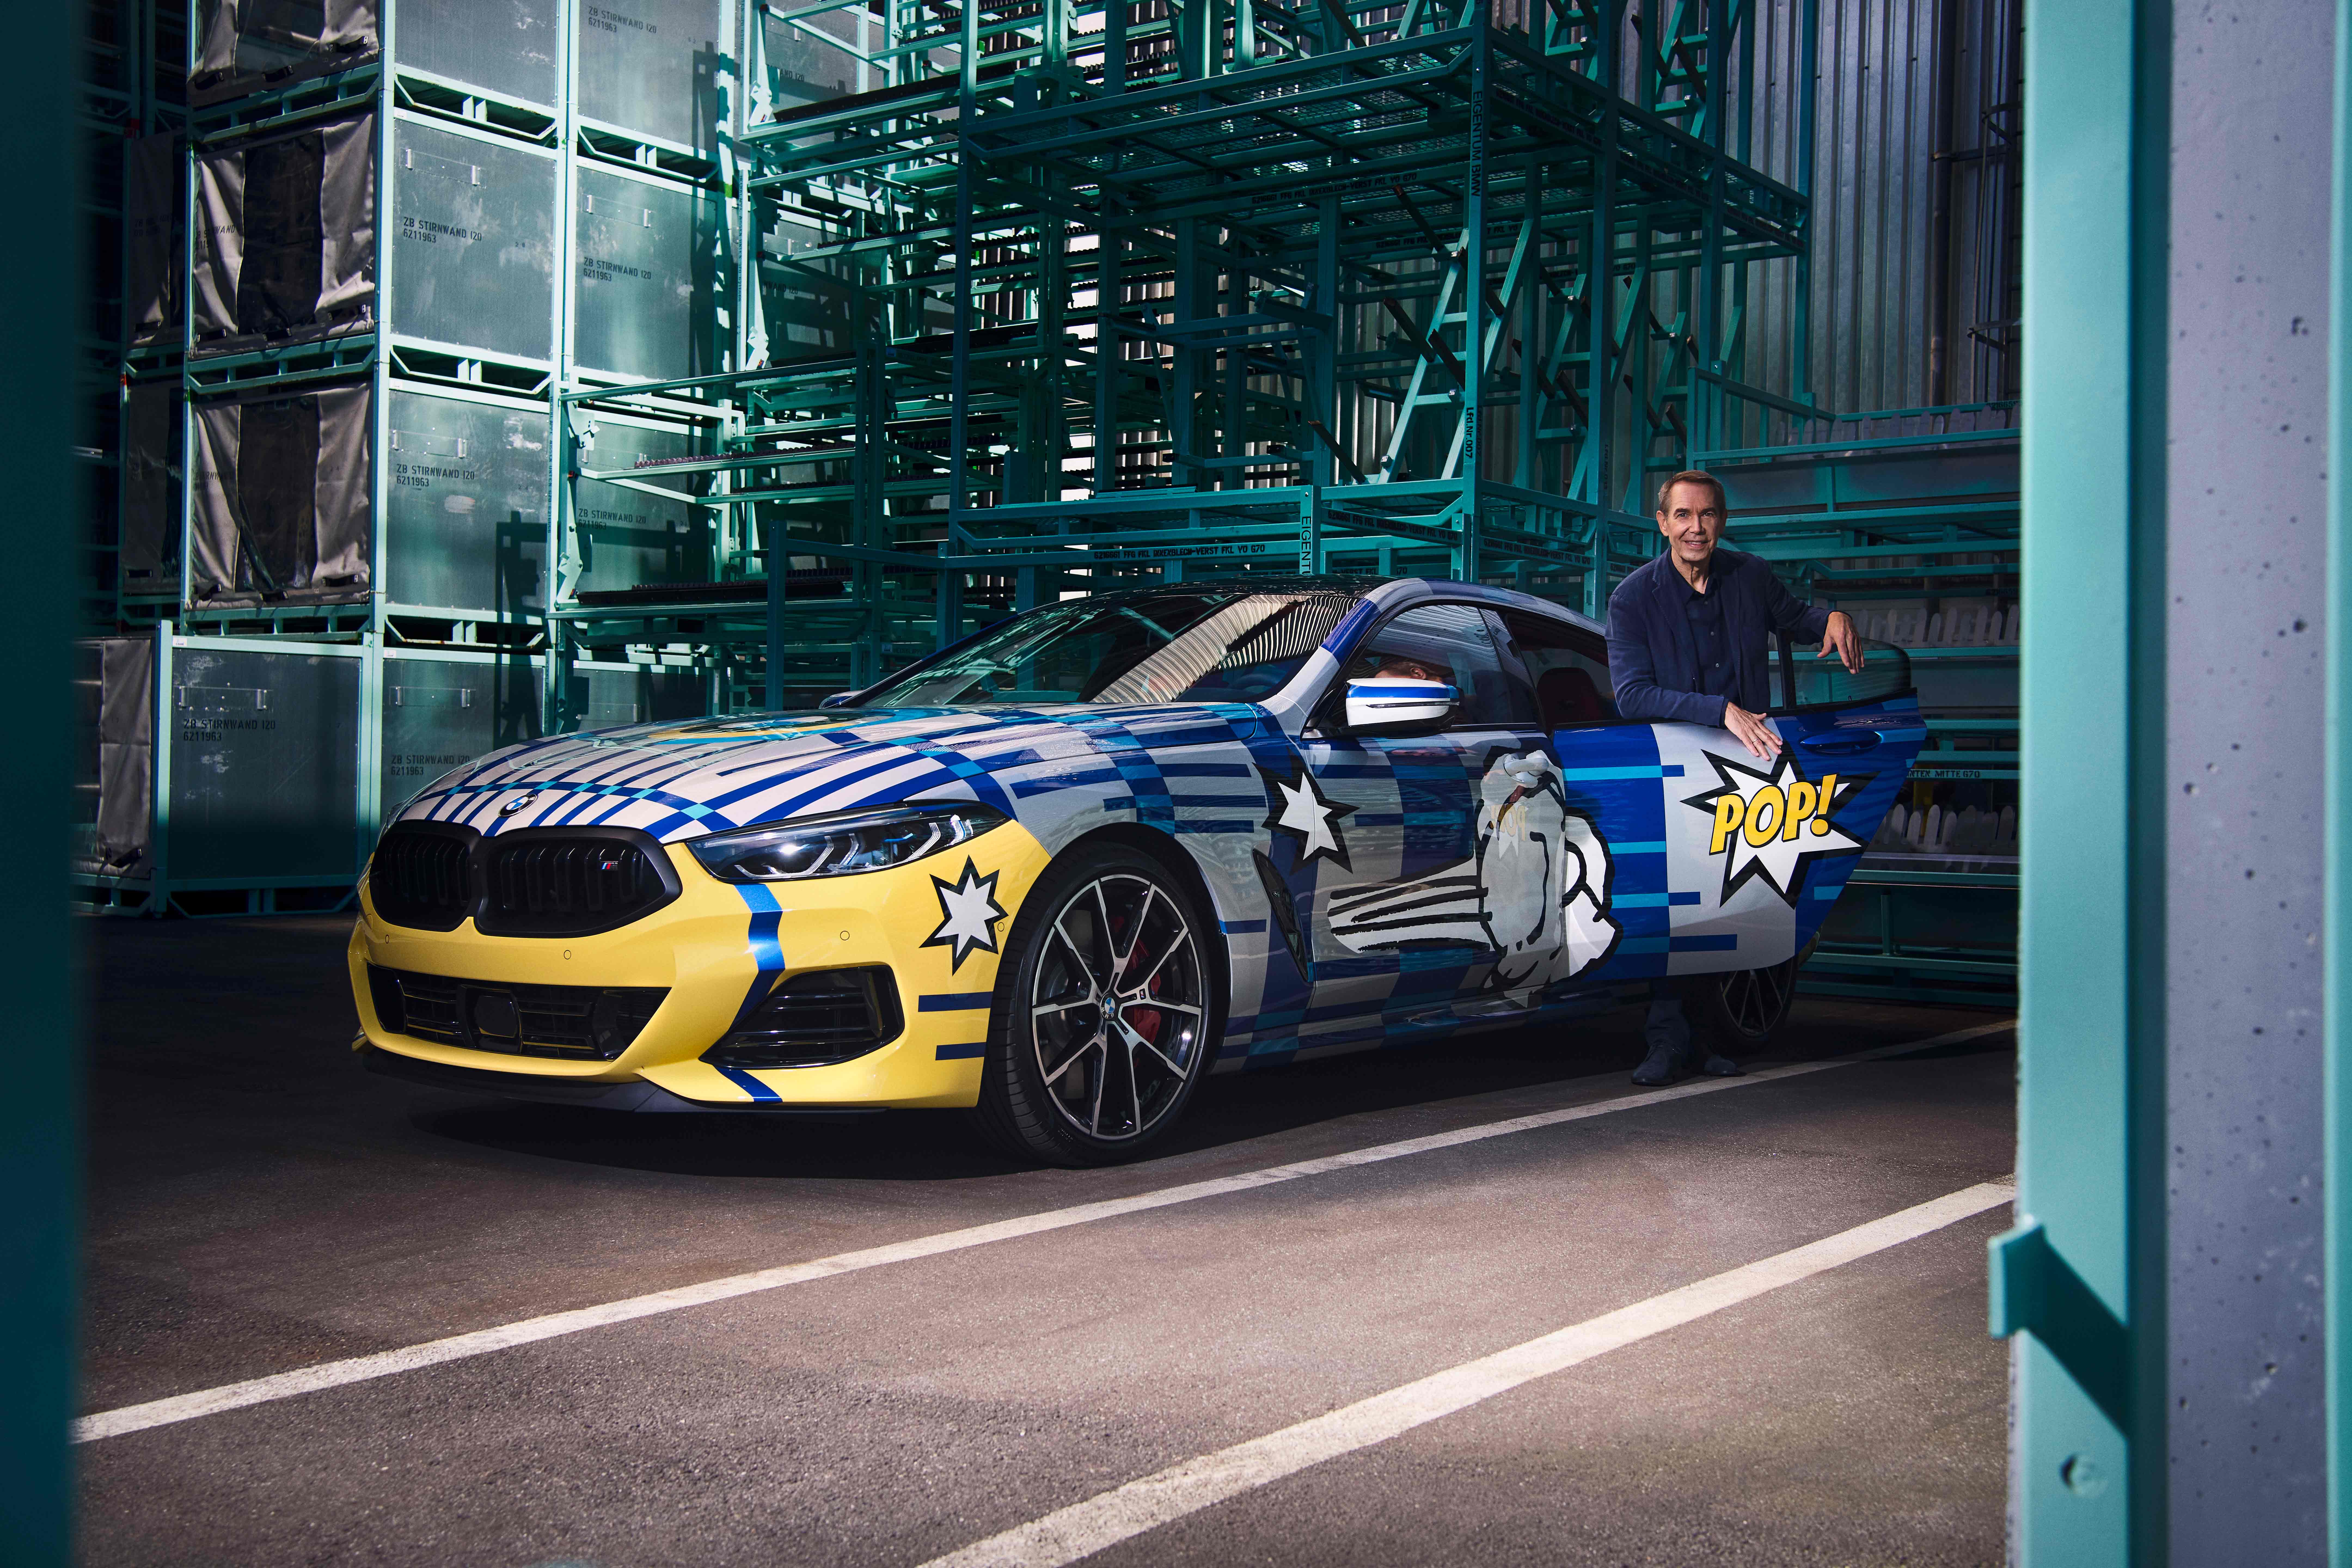 The BMW 8 x Jeff Koons are now on display at Abu Dhabi Motors